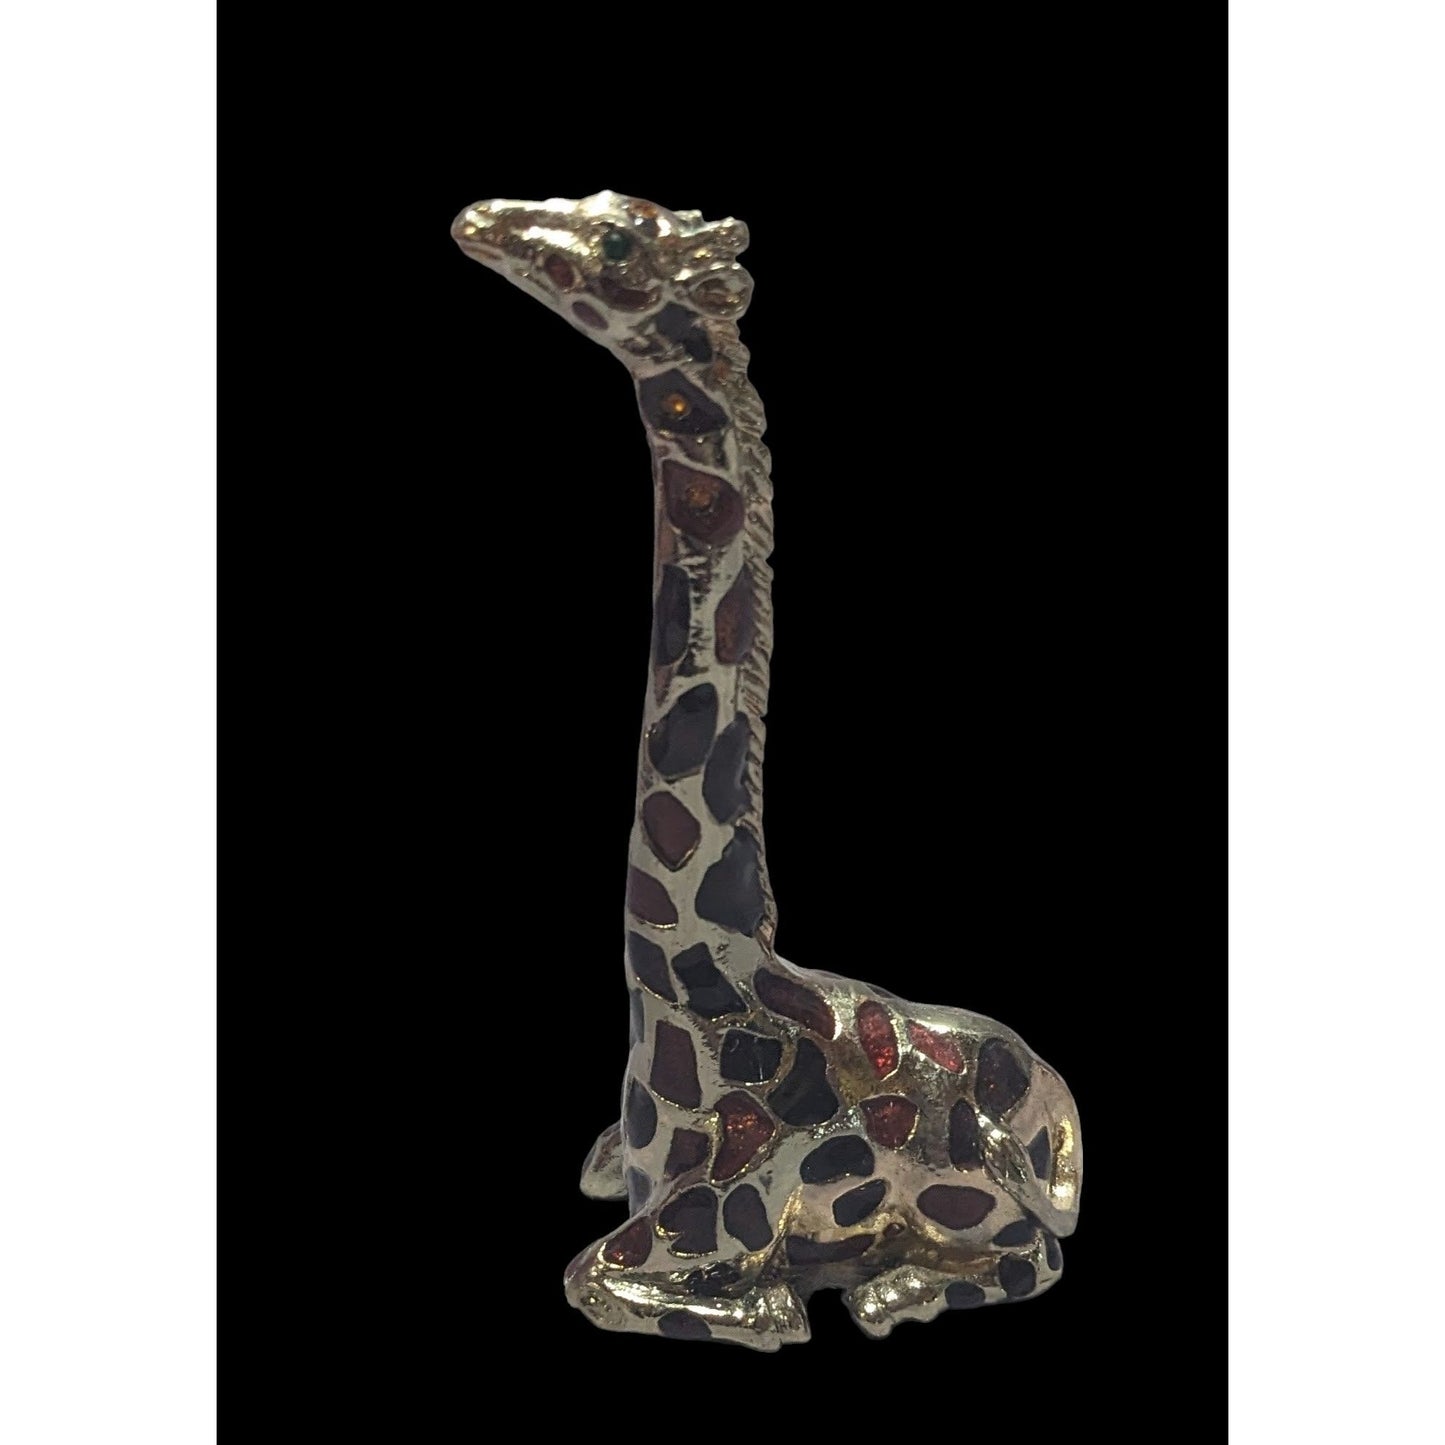 Silver/Gold Giraffe Figurine